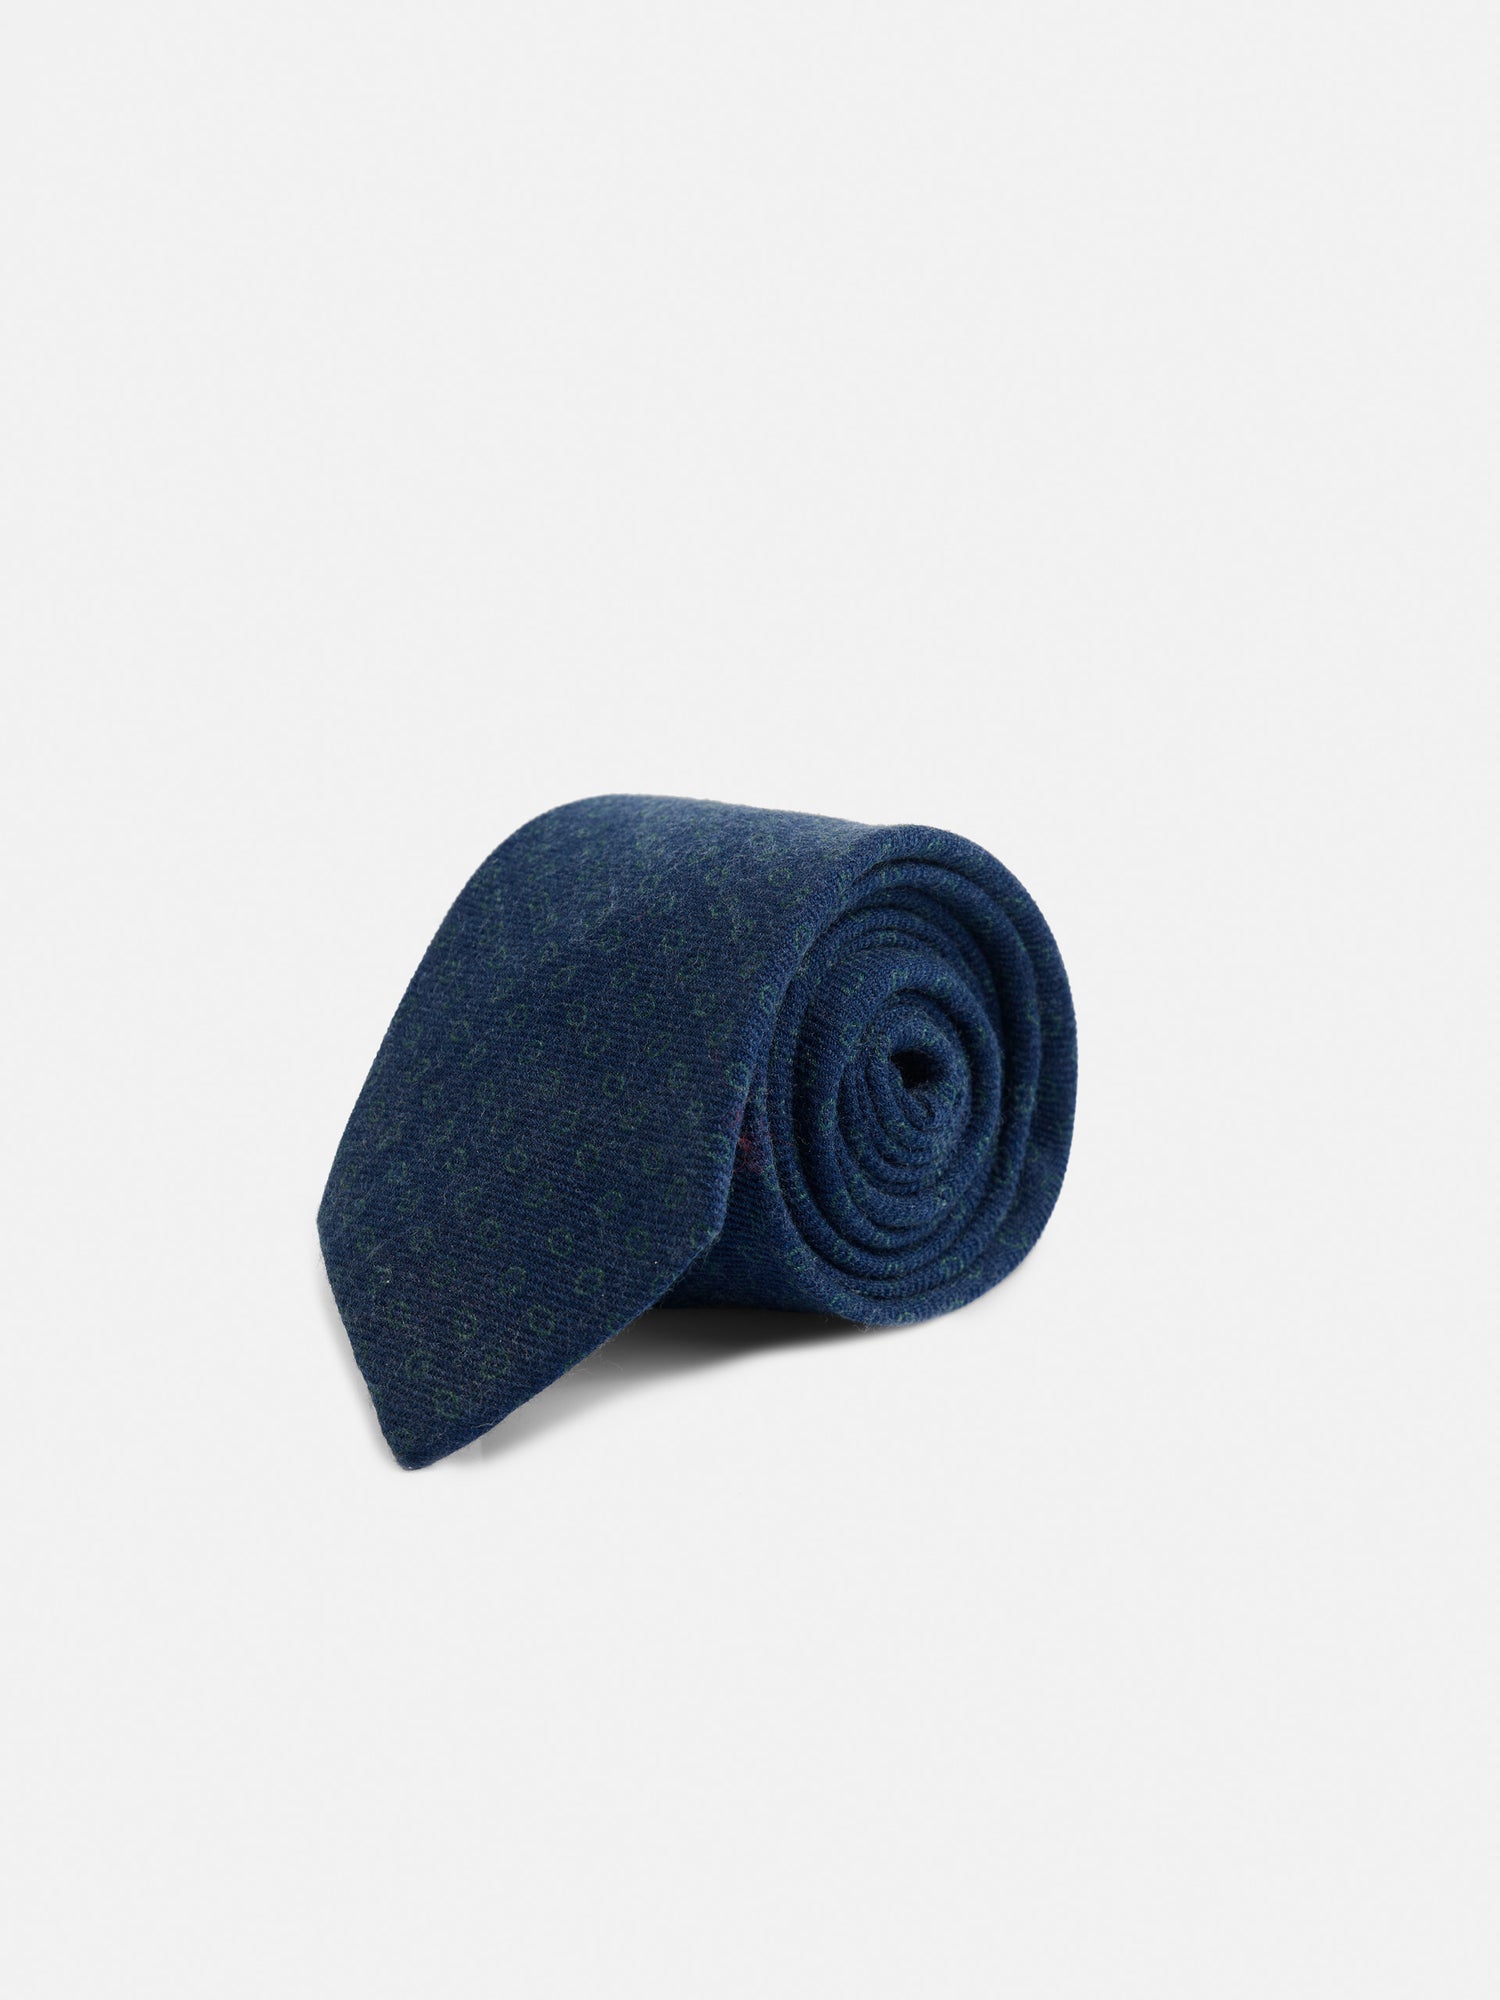 Corbata iconos irregulares azul marino